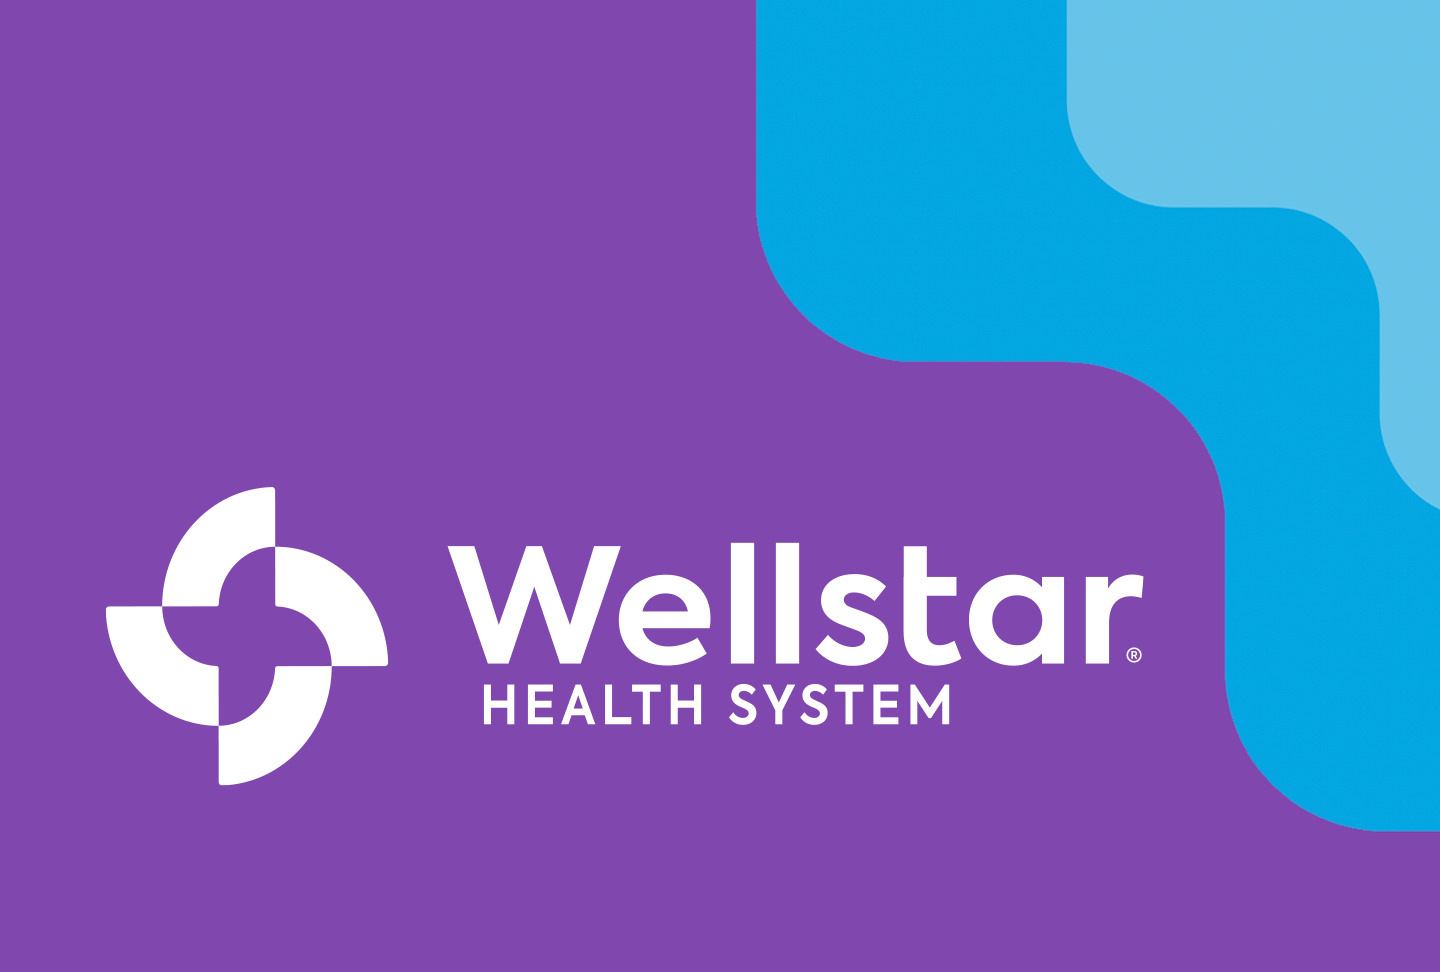 New Wellstar logo on purple background.